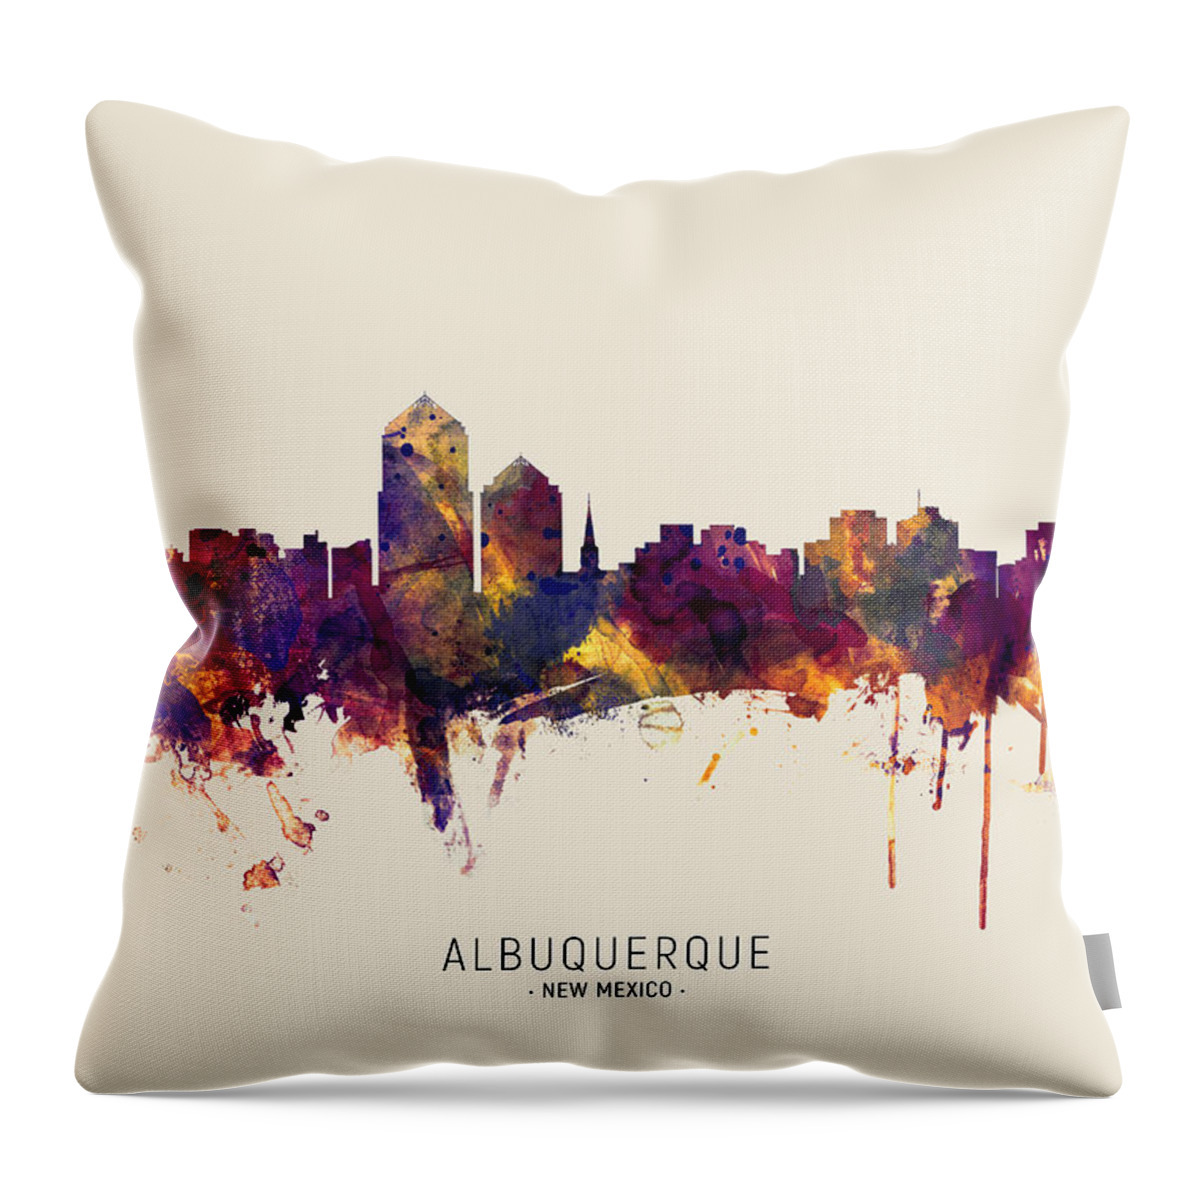 Albuquerque Throw Pillow featuring the digital art Albuquerque New Mexico Skyline #29 by Michael Tompsett